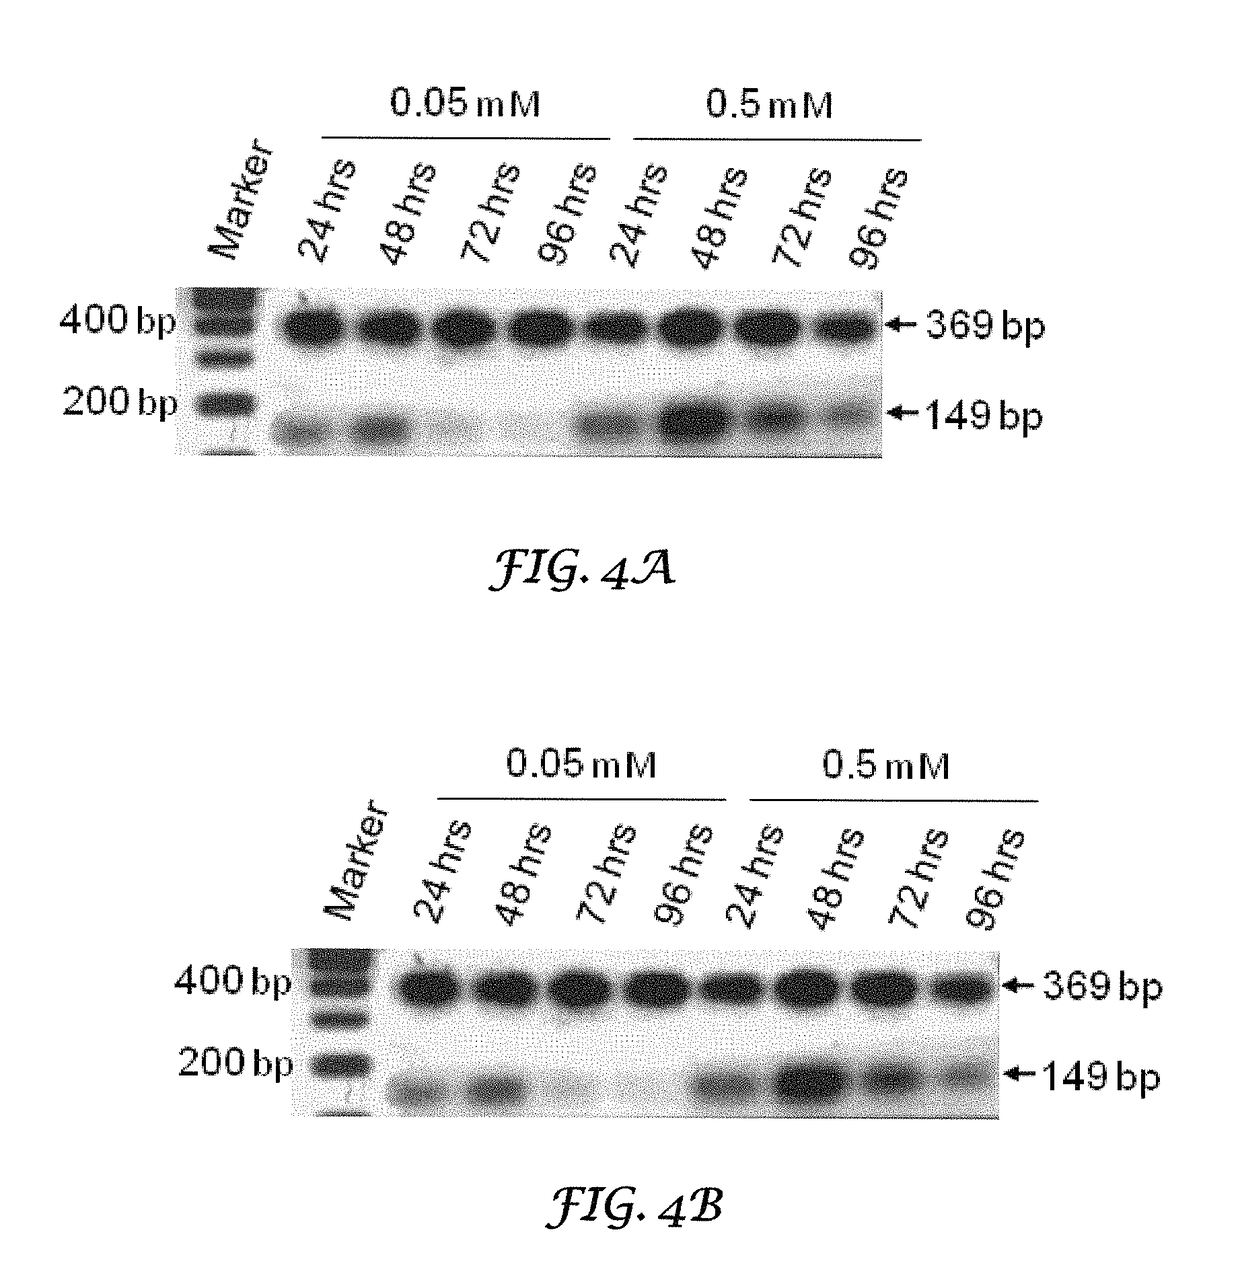 Thrombocyte inhibition via vivo-morpholino knockdown of alpha IIb